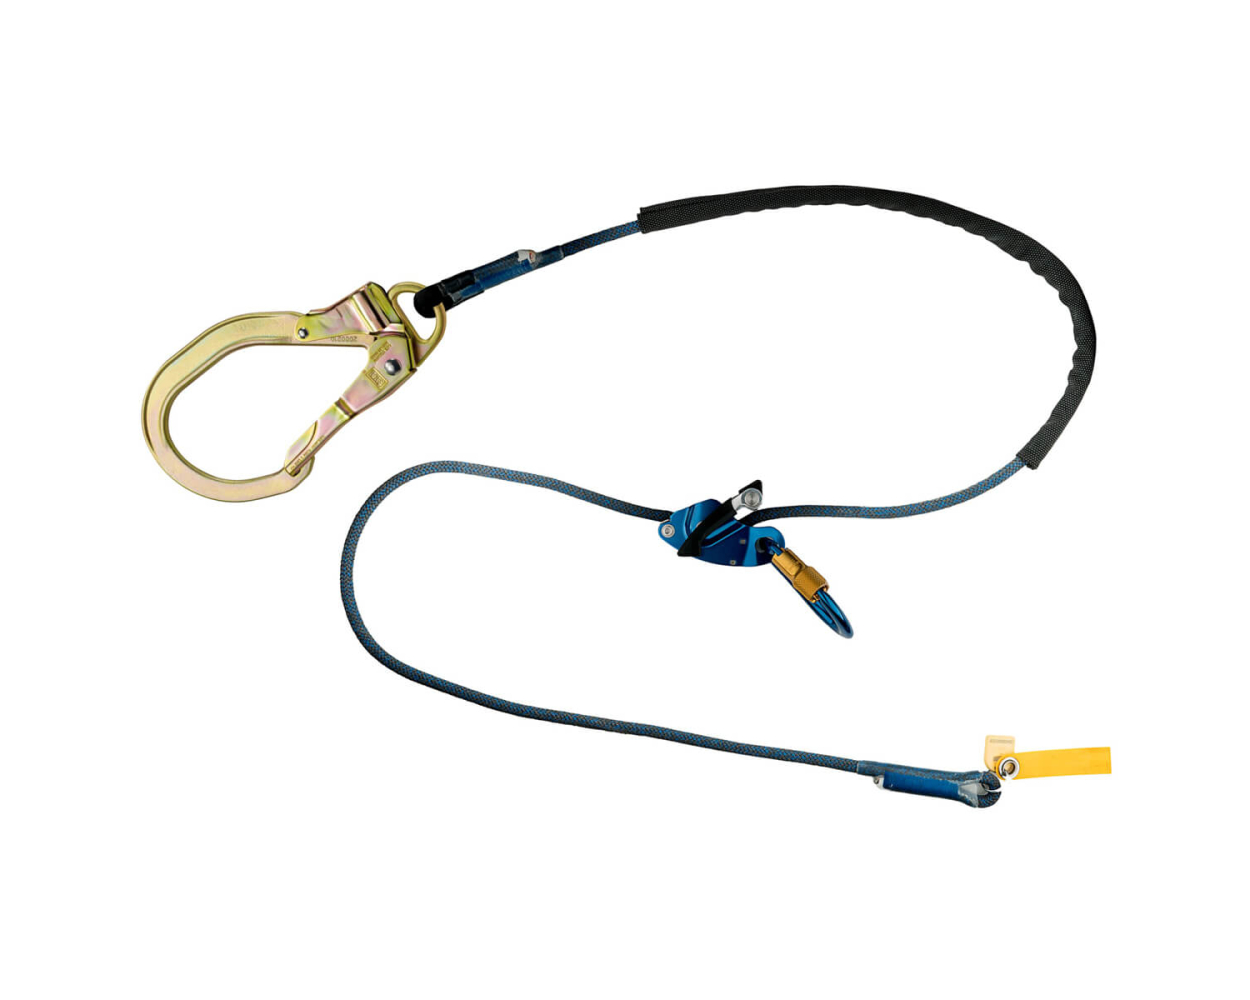 DBI Sala 1234088 10' Trigger x Tie-Back Adjustable Rope Positioning Lanyard